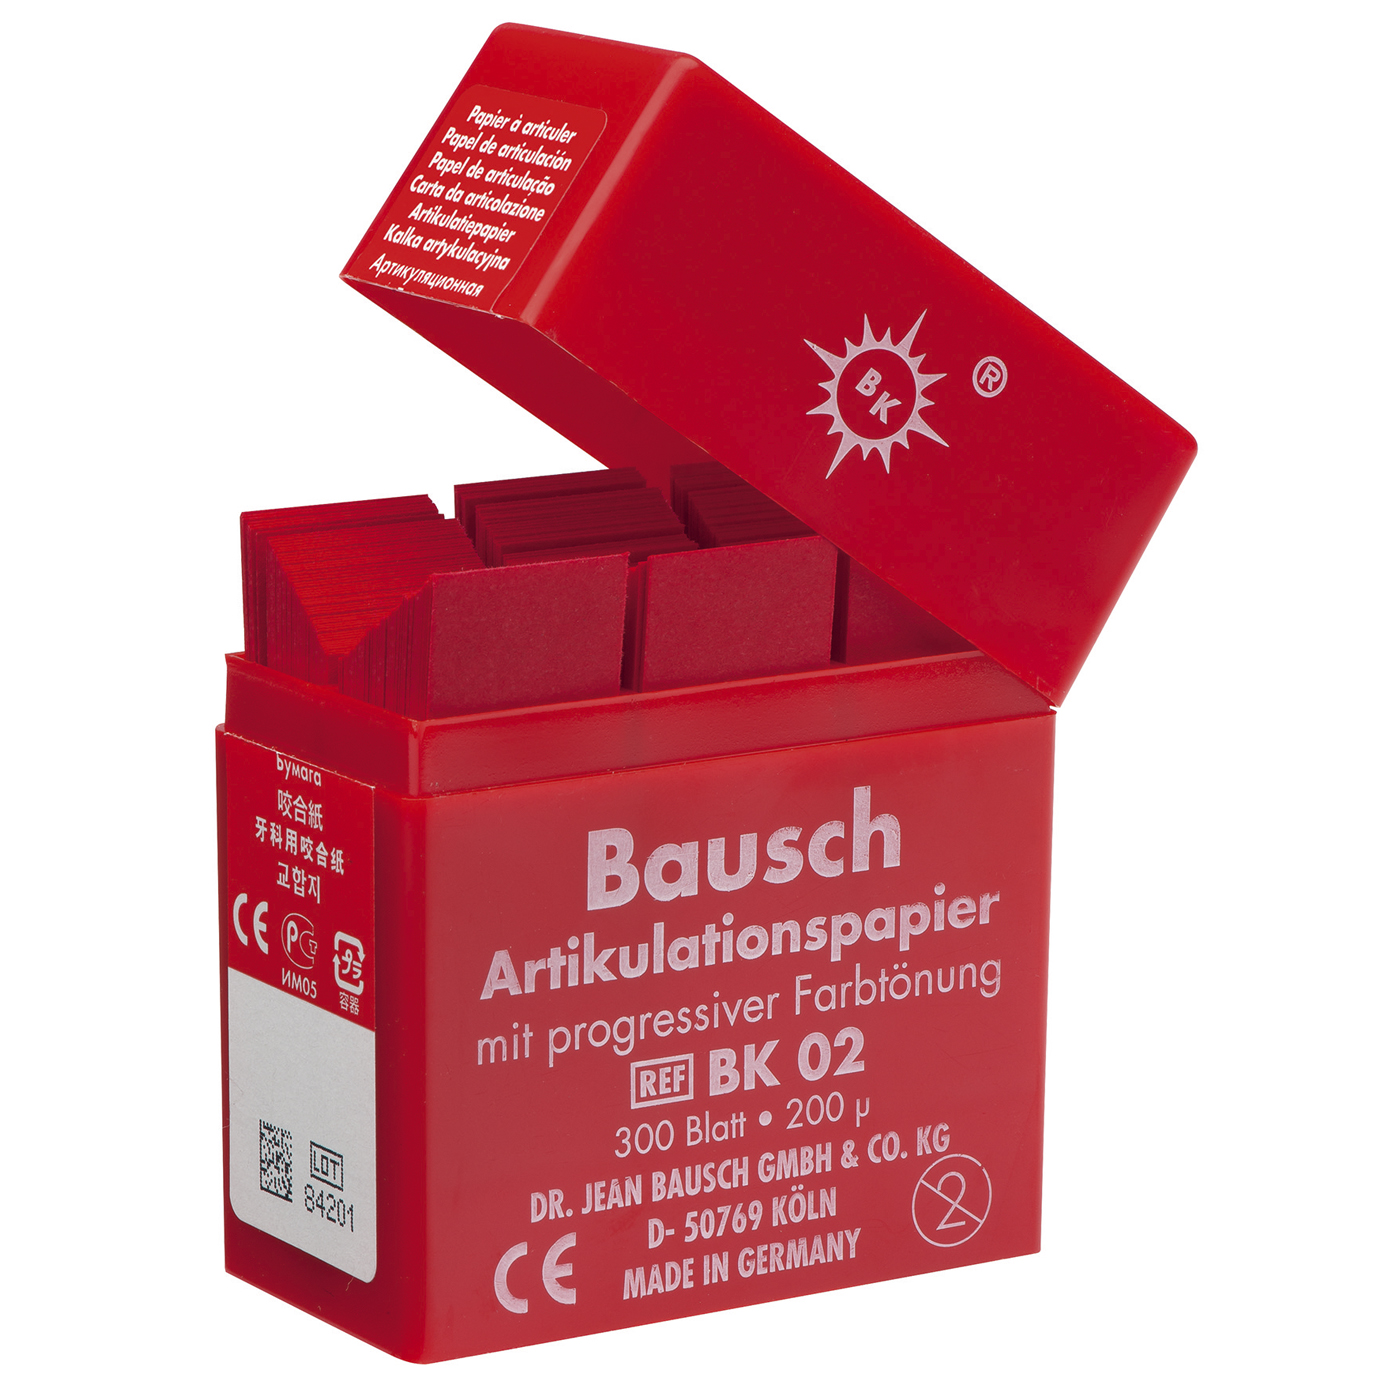 Bausch Articulation Paper, Plastic Box, Red